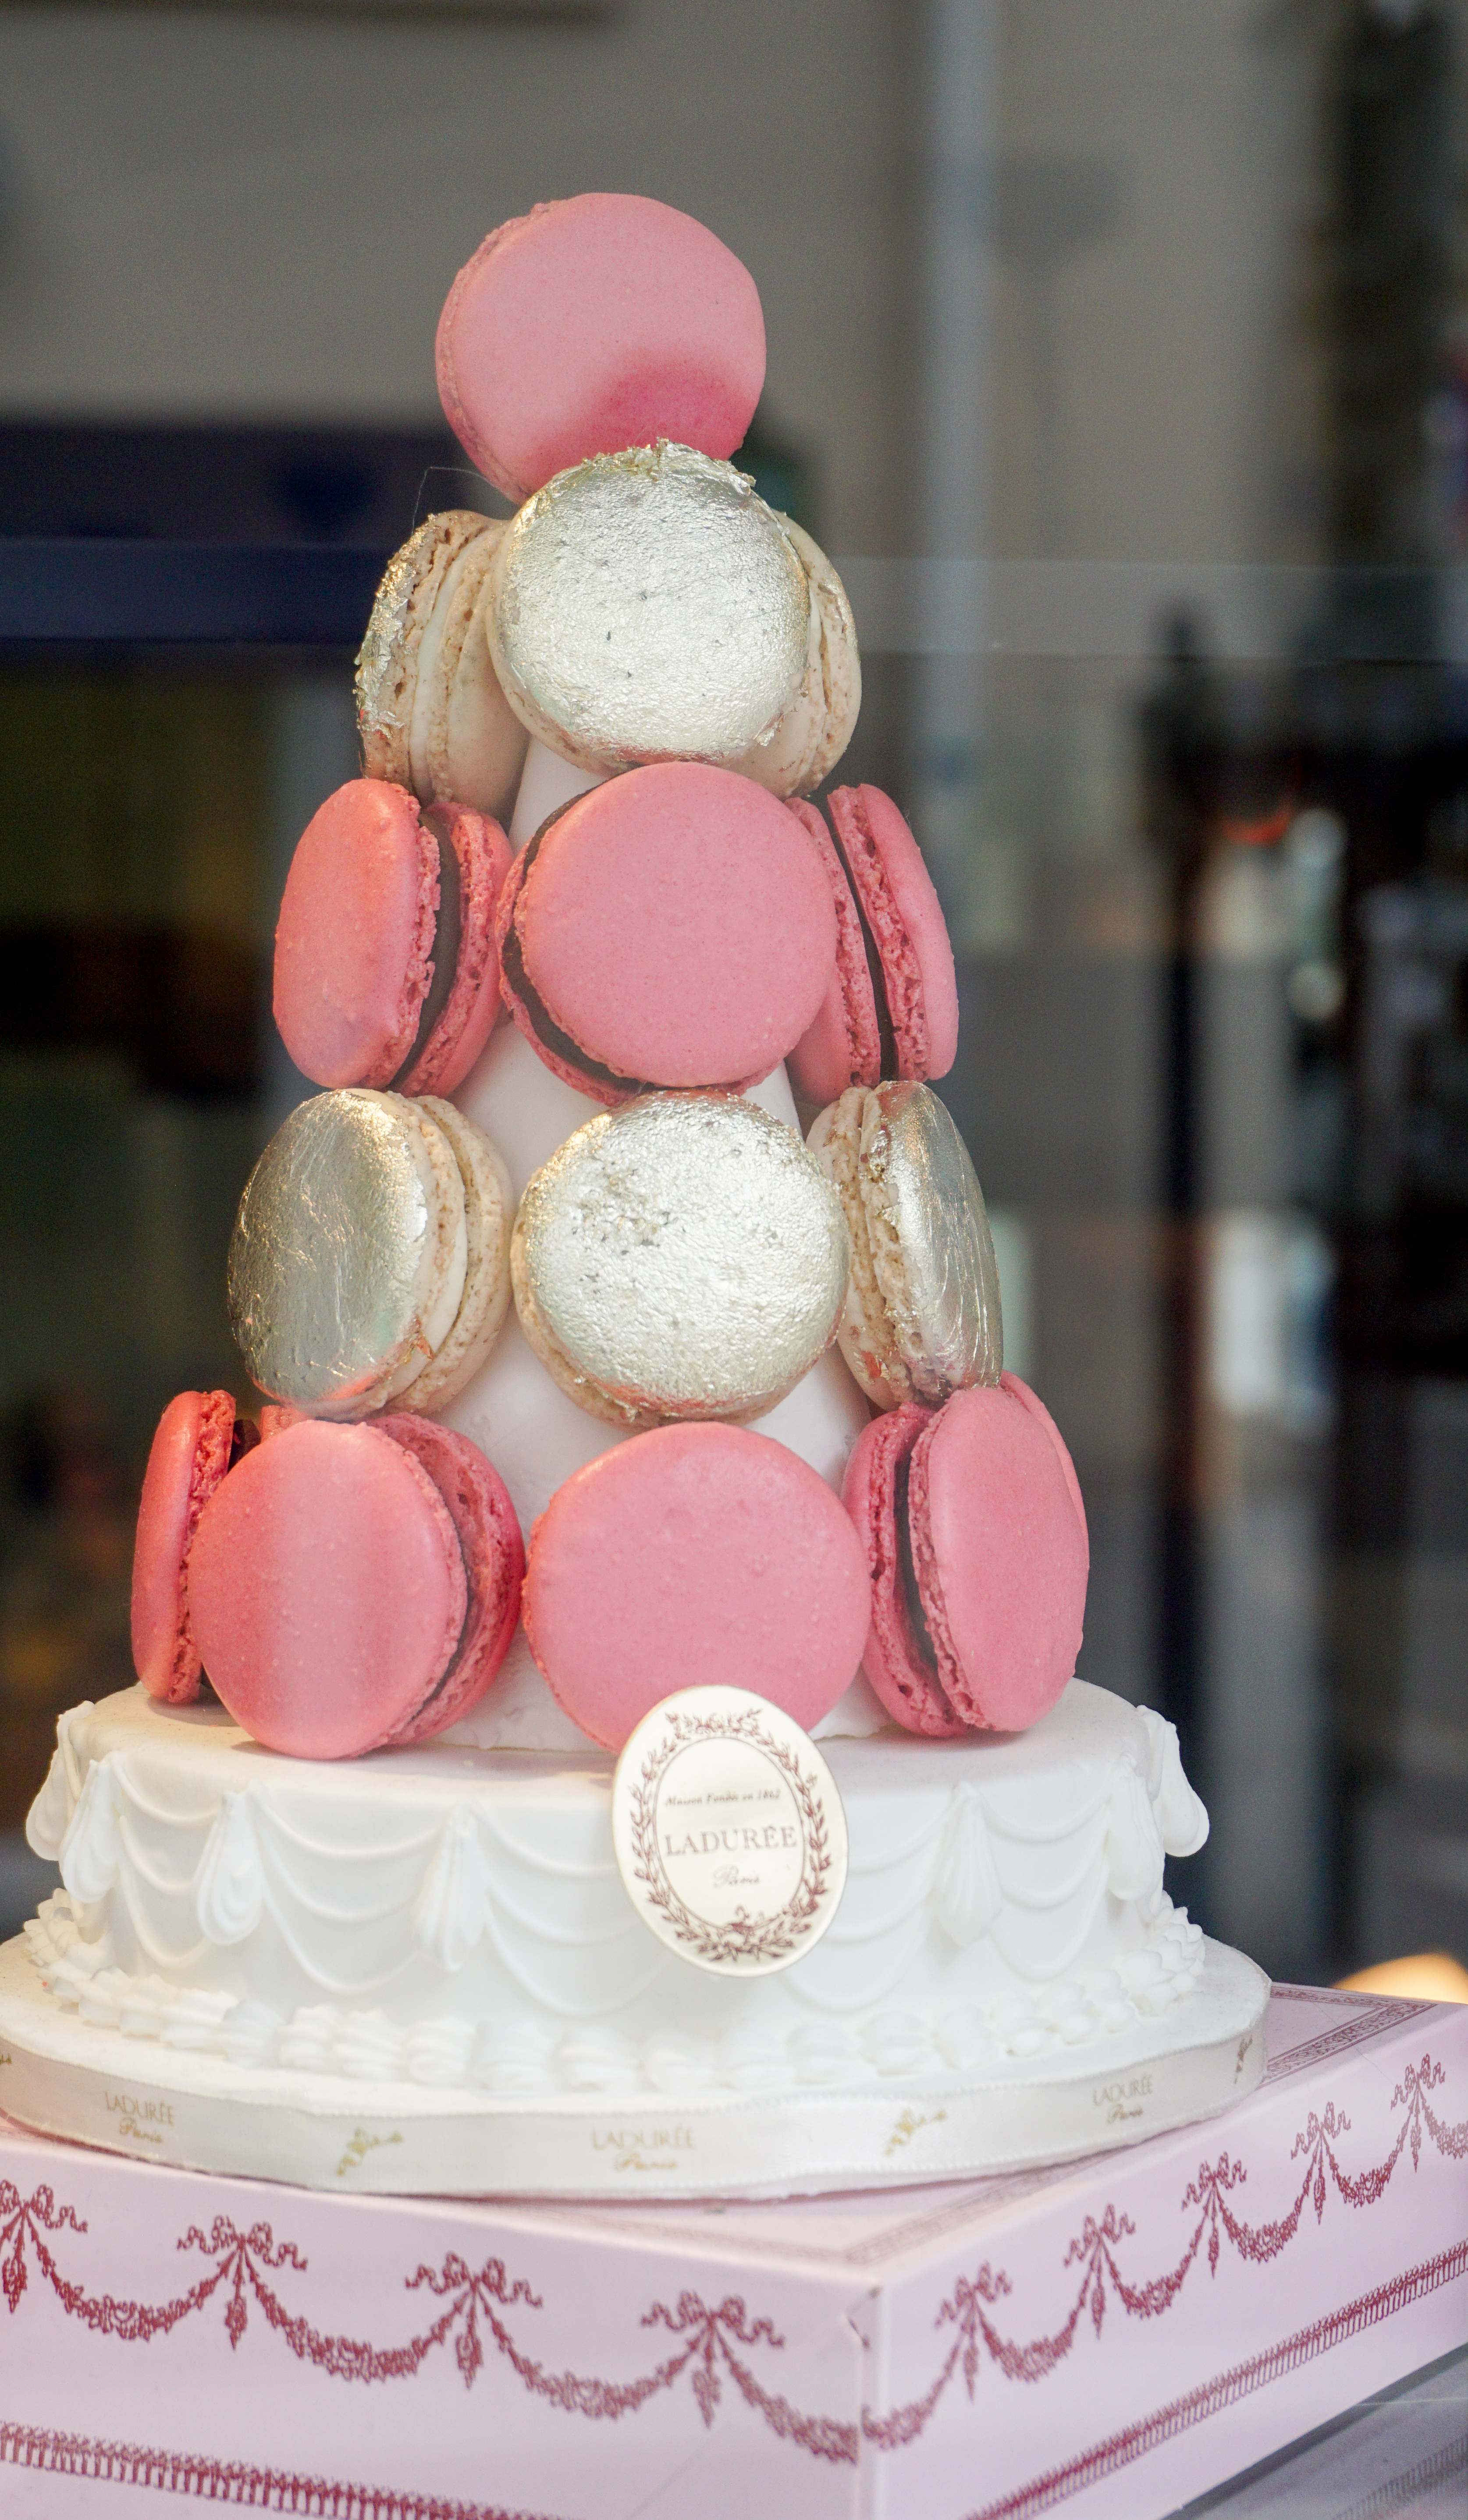 macarons on display at Ladurée Paris